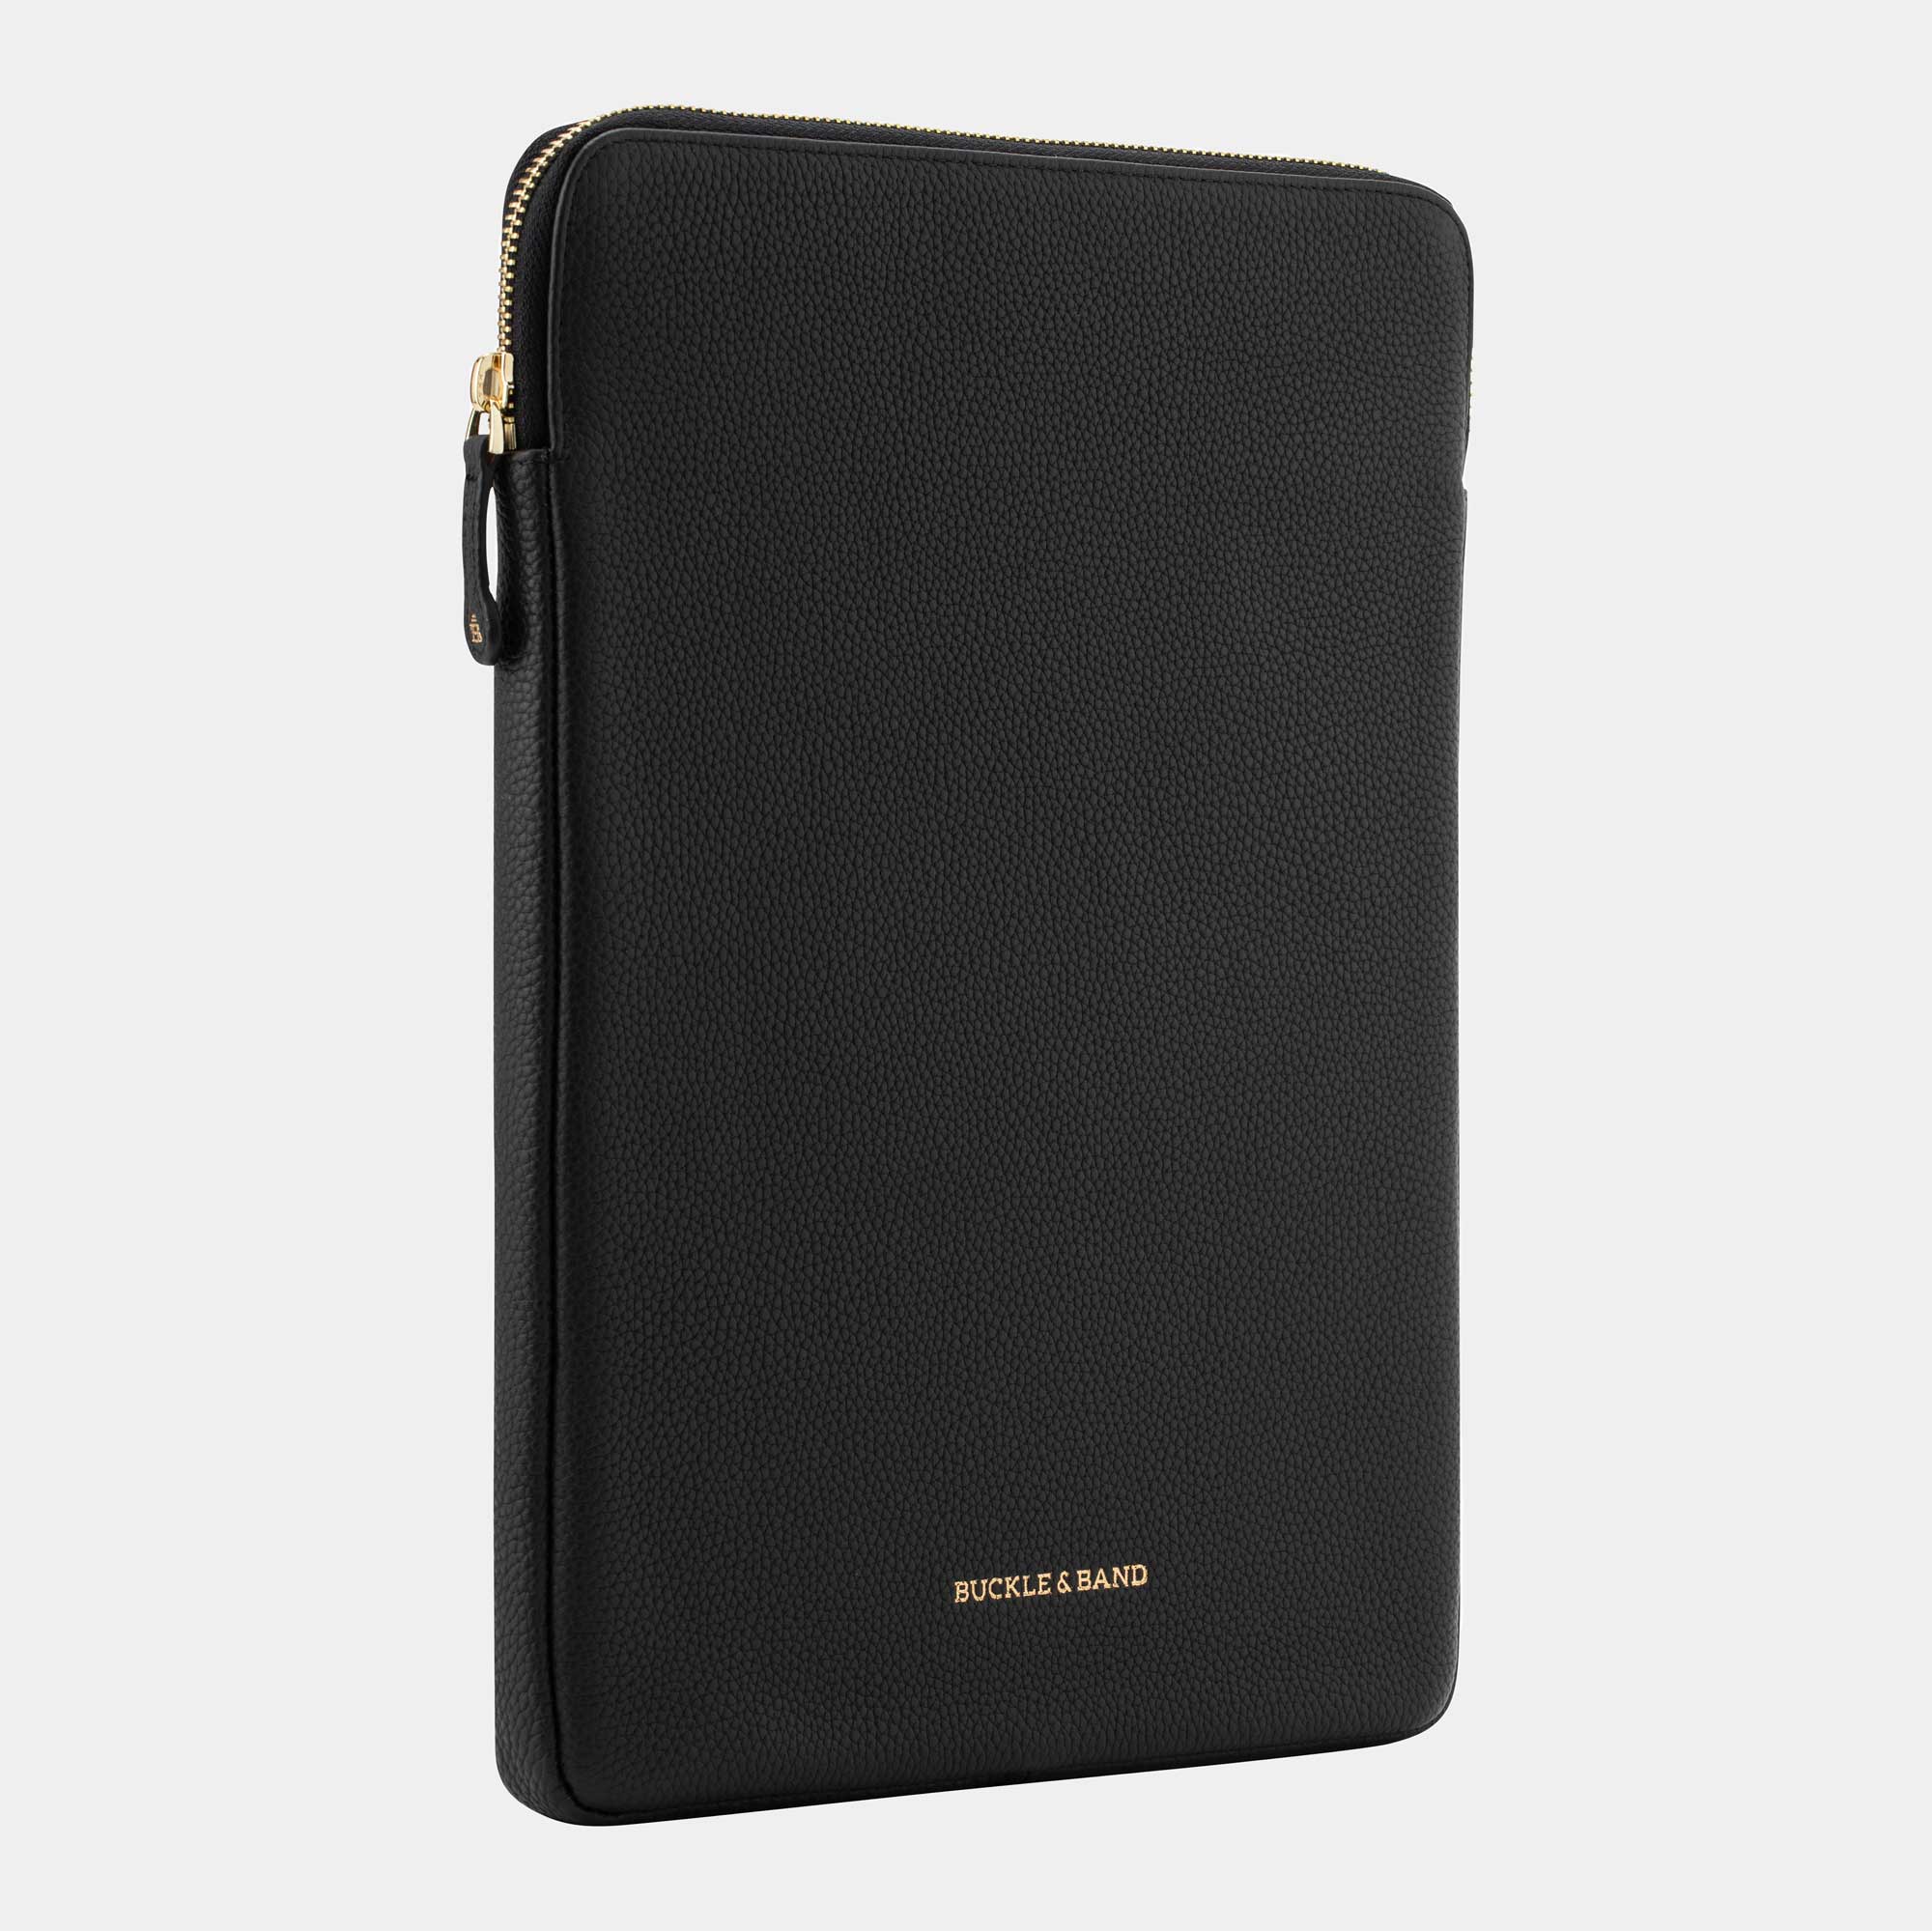 3-inch MacBook Pro in black leather case